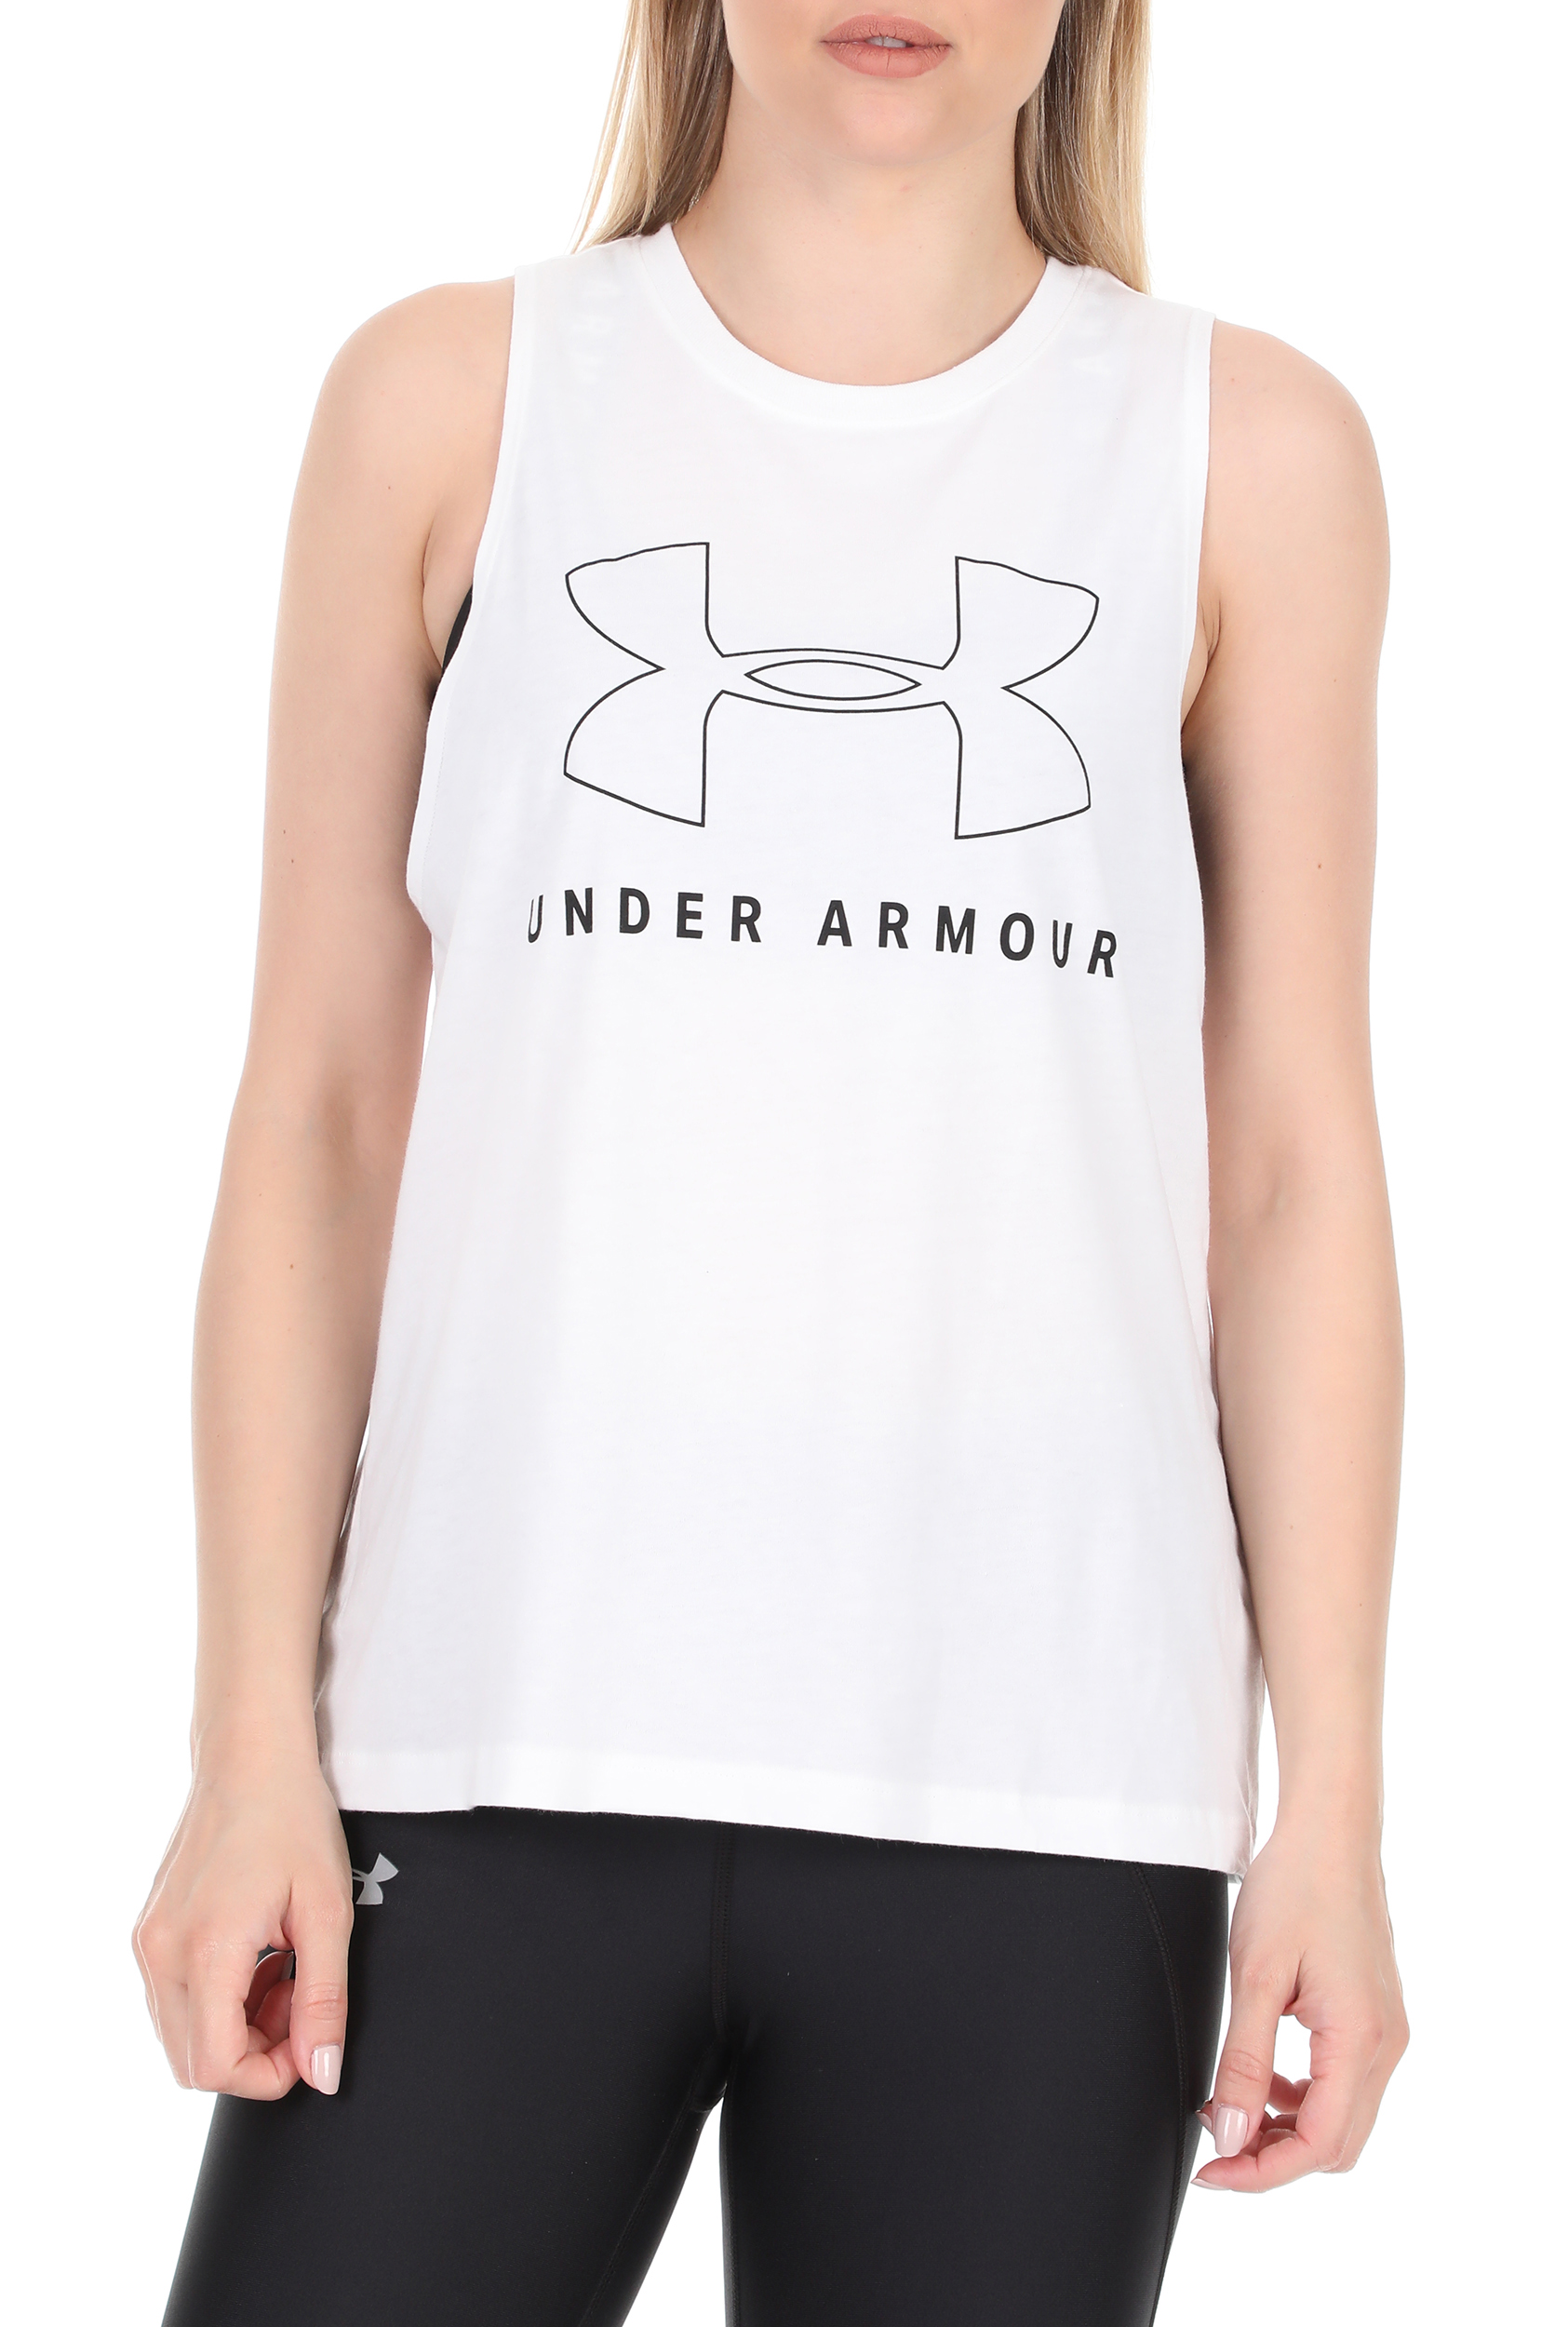 UNDER ARMOUR – Γυναικεία αμάνικη μπλούζα UNDER ARMOUR SPORTSTYLE GRAPHIC MUS λευκή 1781900.0-9171